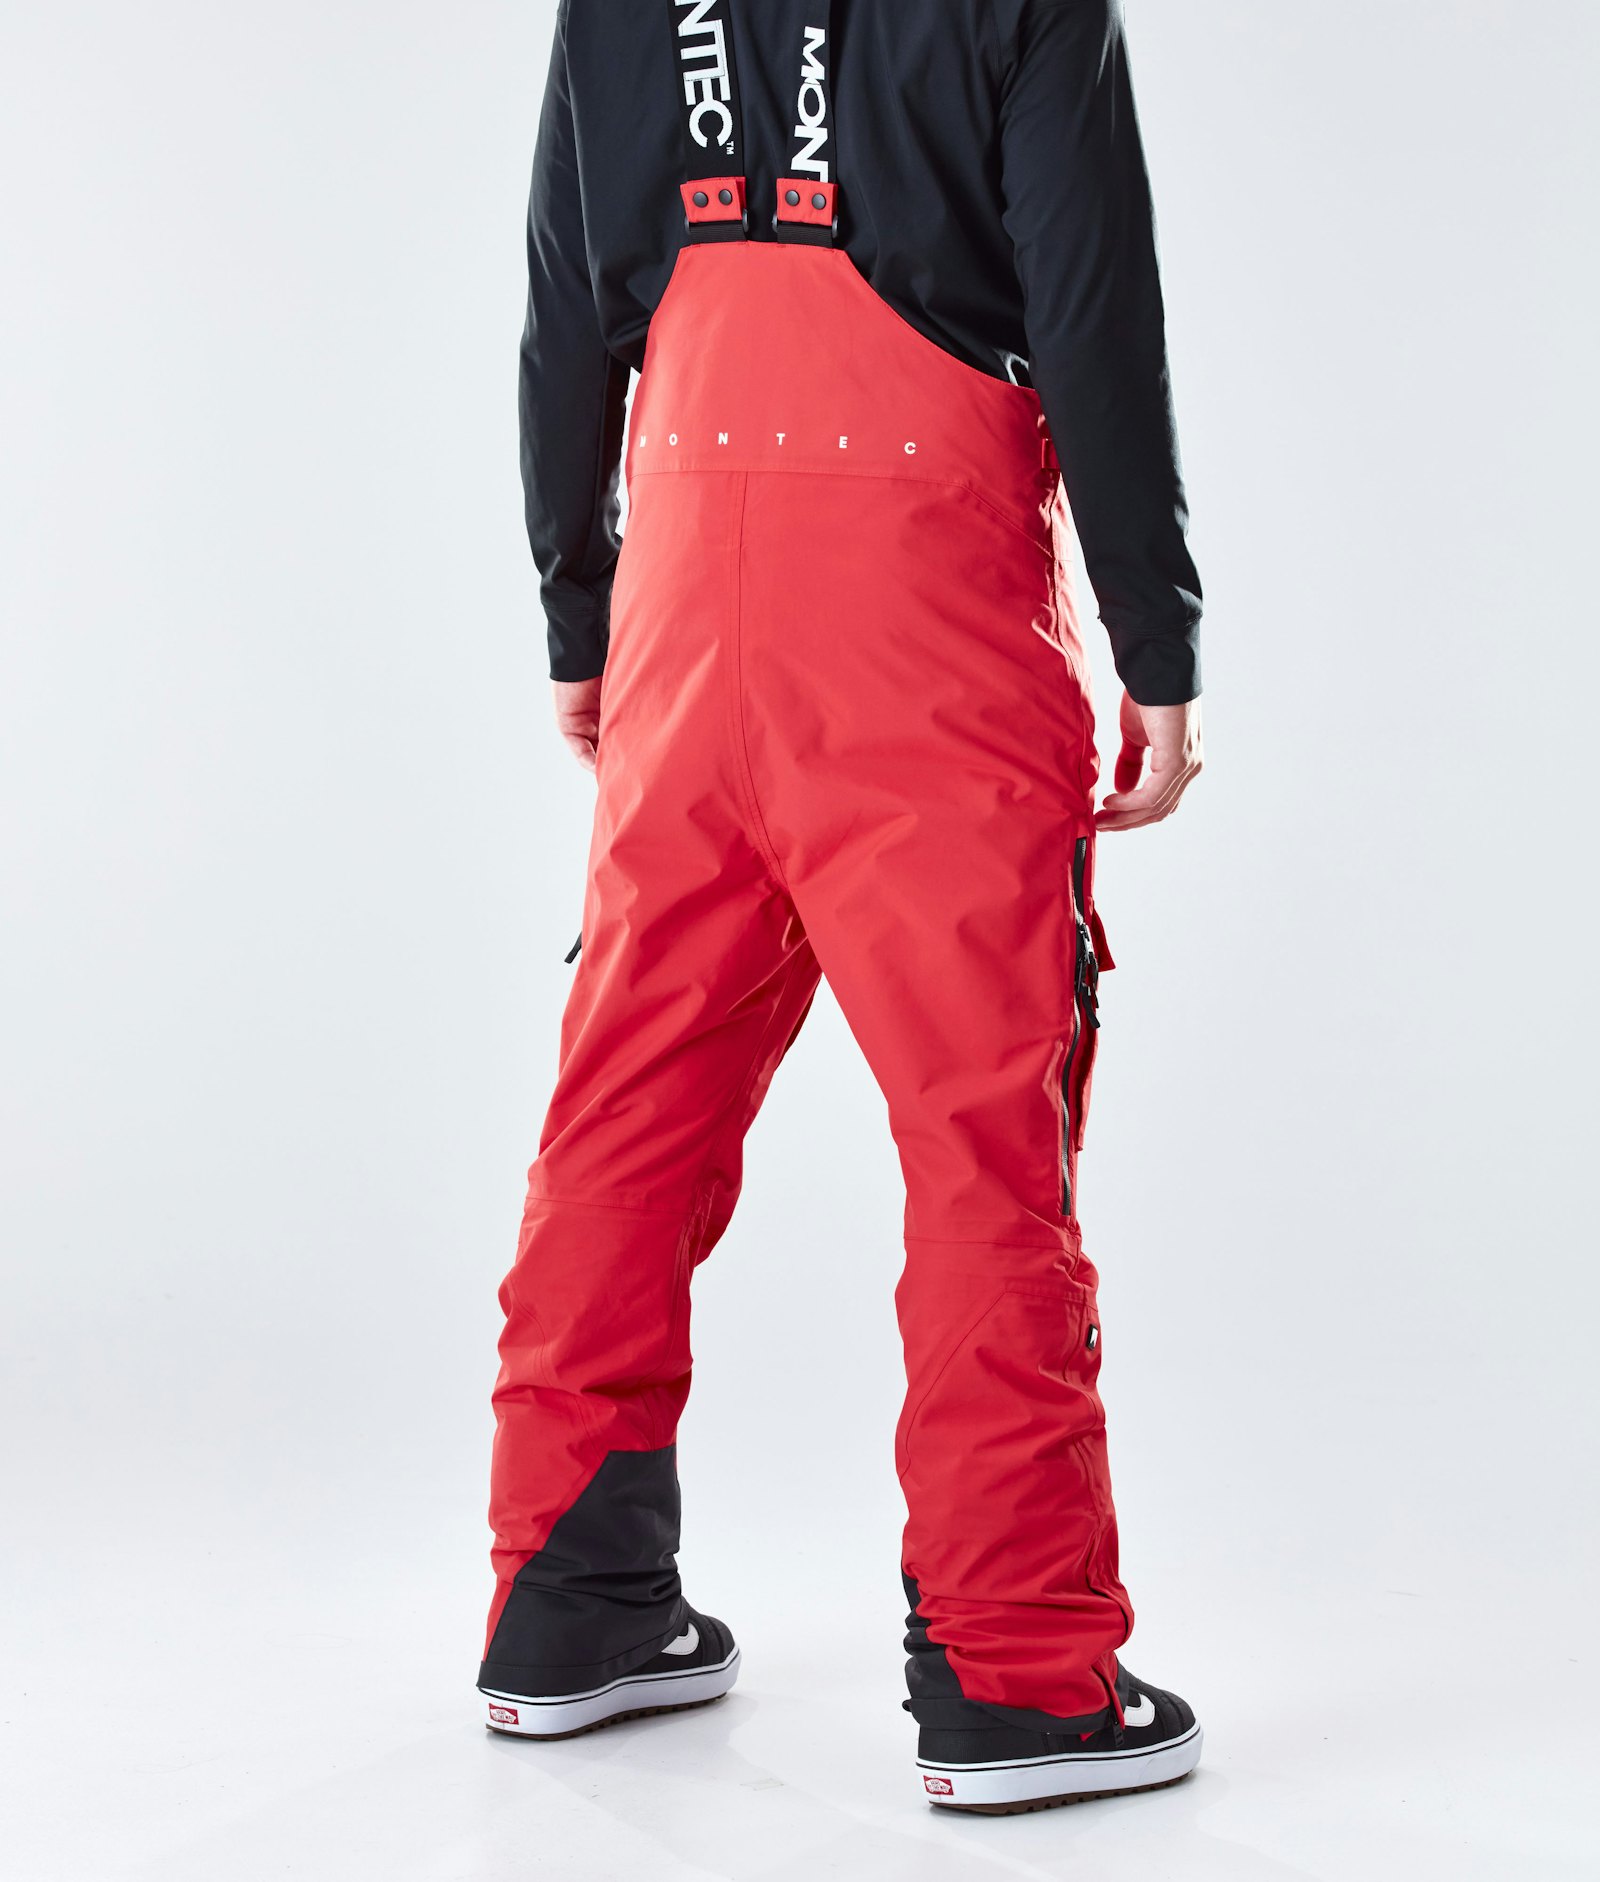 Fawk 2020 Pantalones Snowboard Hombre Red Renewed, Imagen 3 de 6